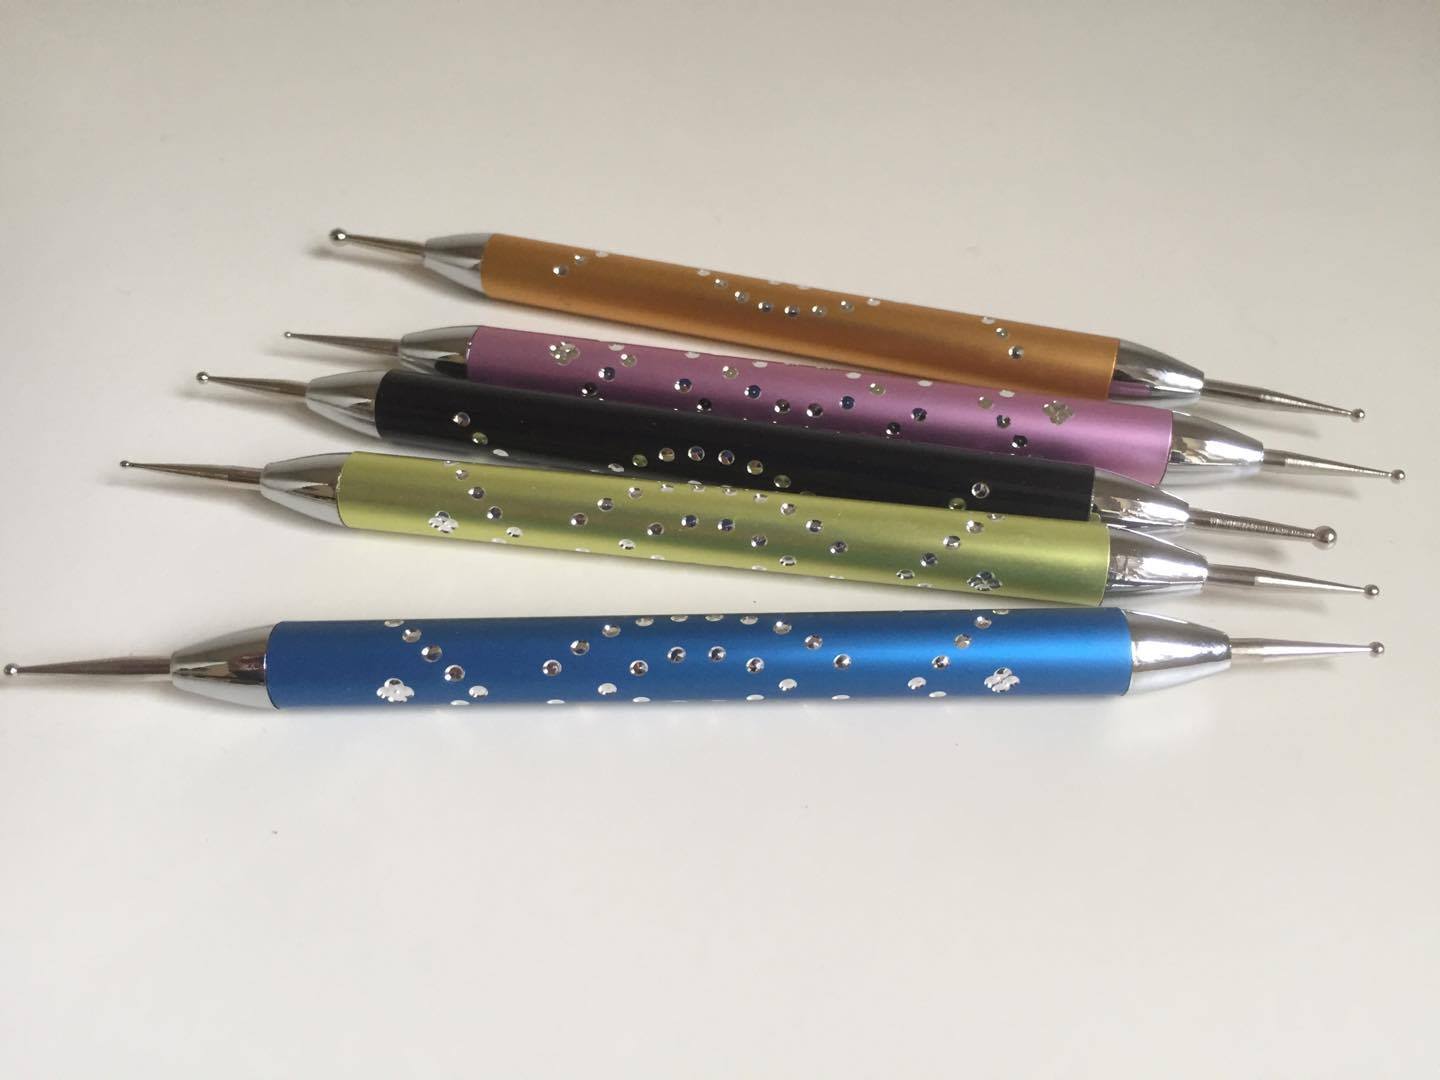 2. 5pcs Nail Art Dotting Pen Set - wide 9